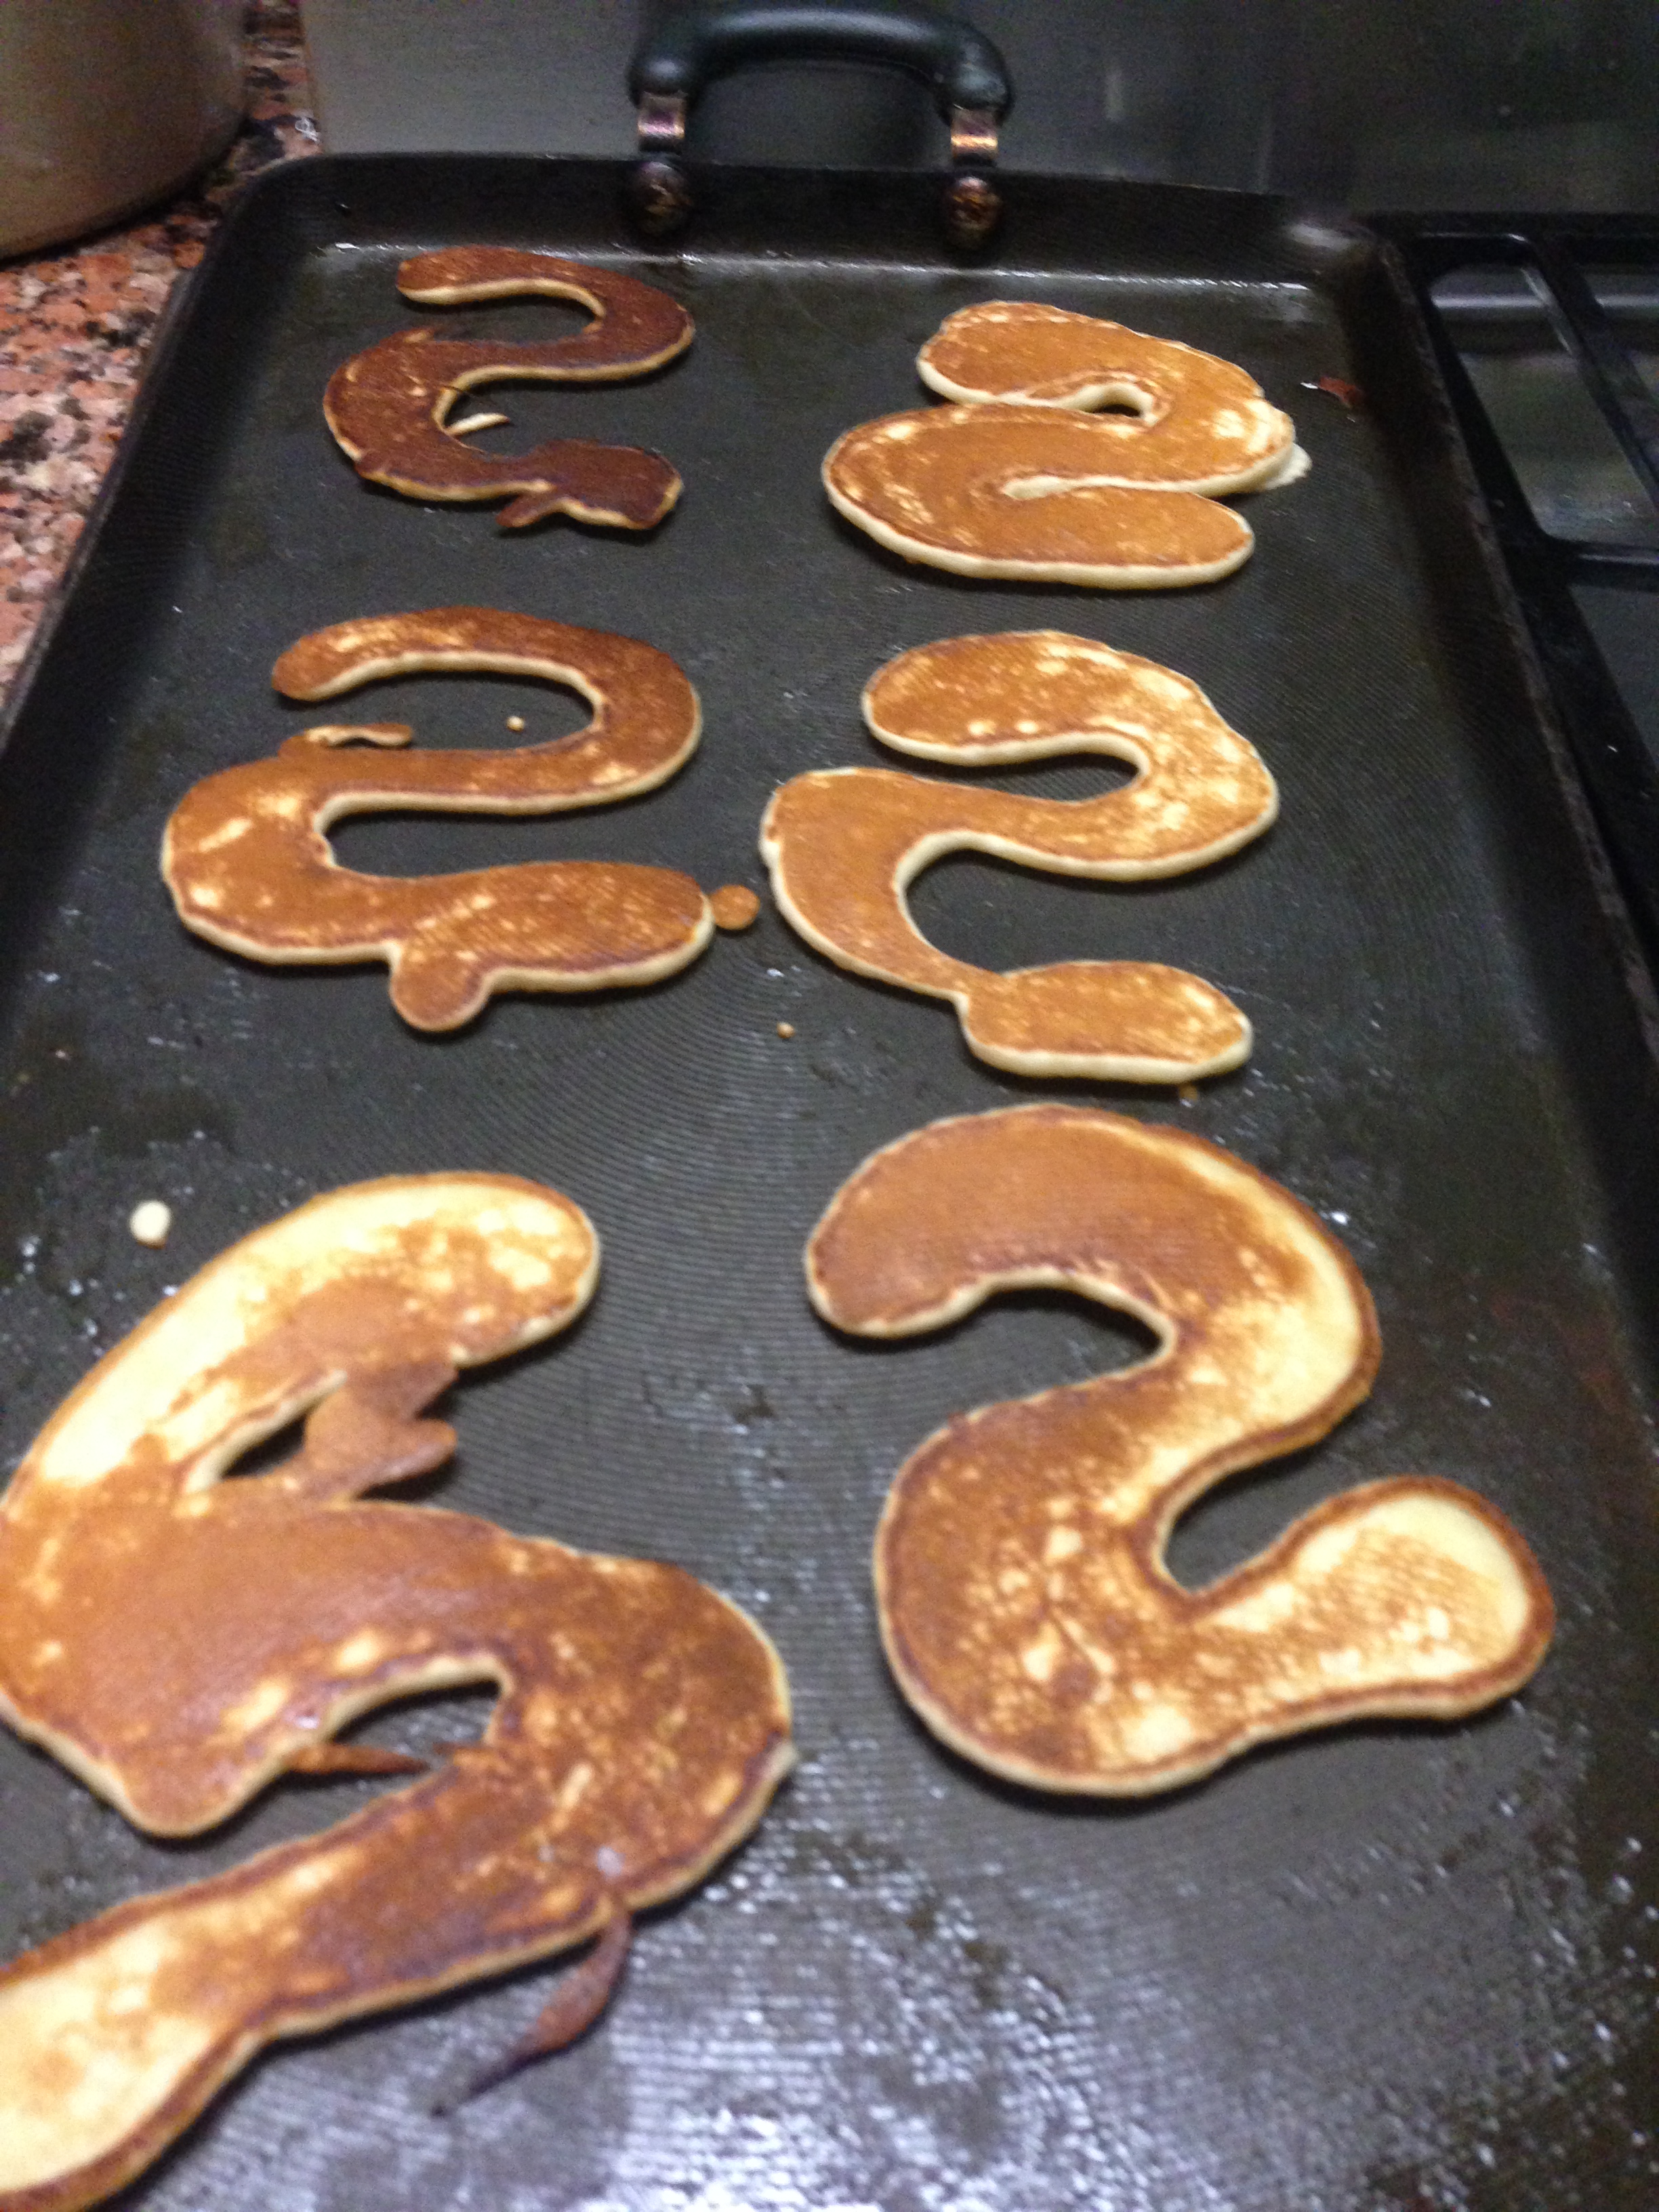 Snake pancakes without green dye on grill pan